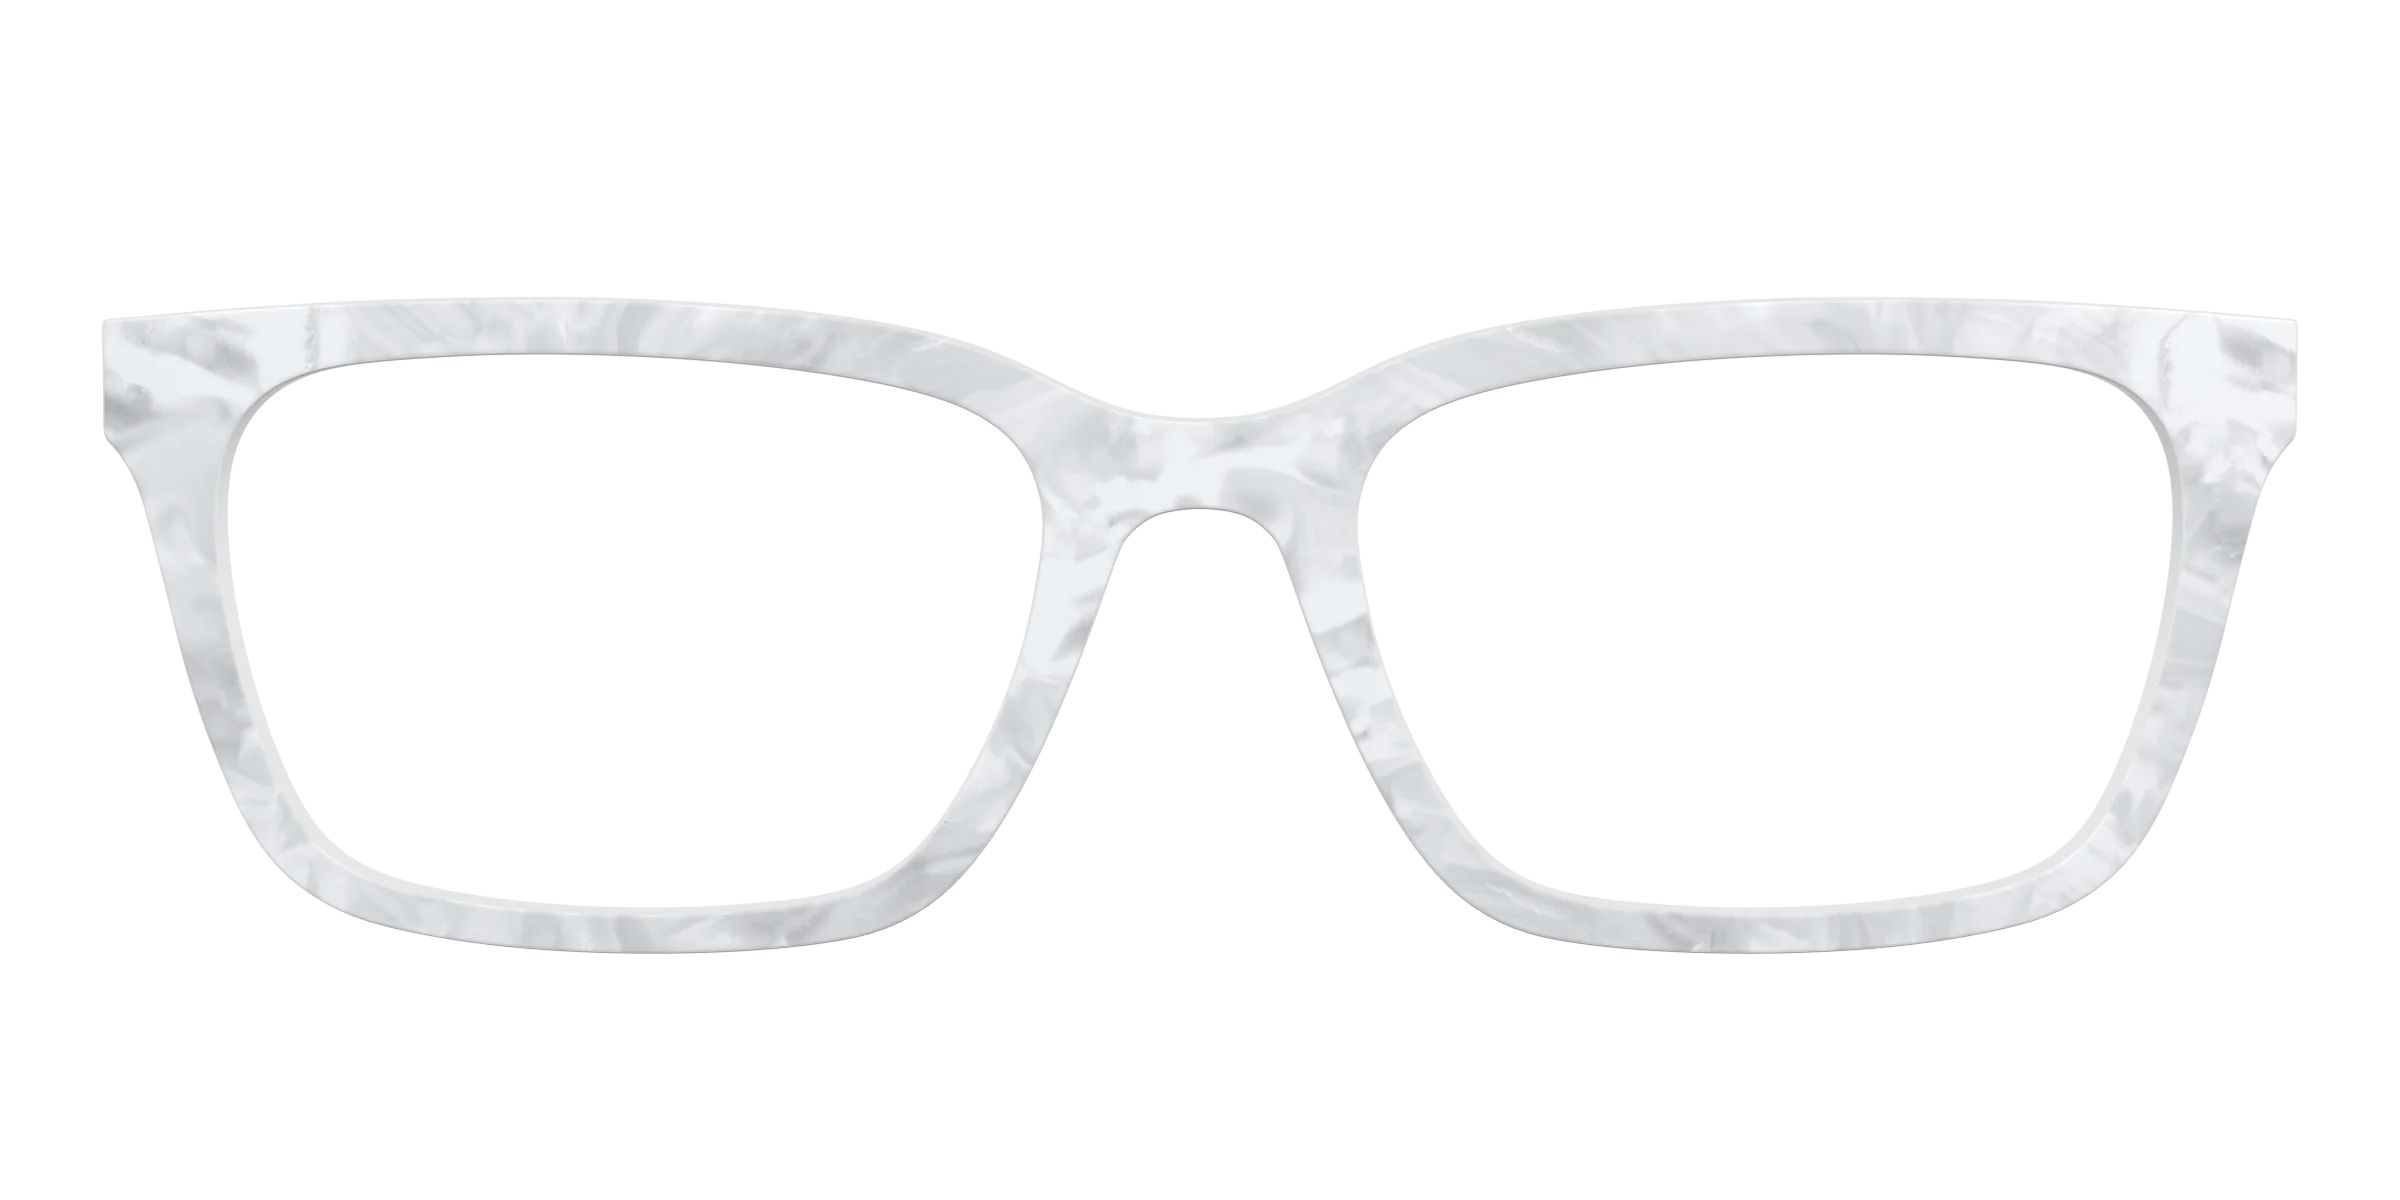 The White Pearlescent | Pair Eyewear